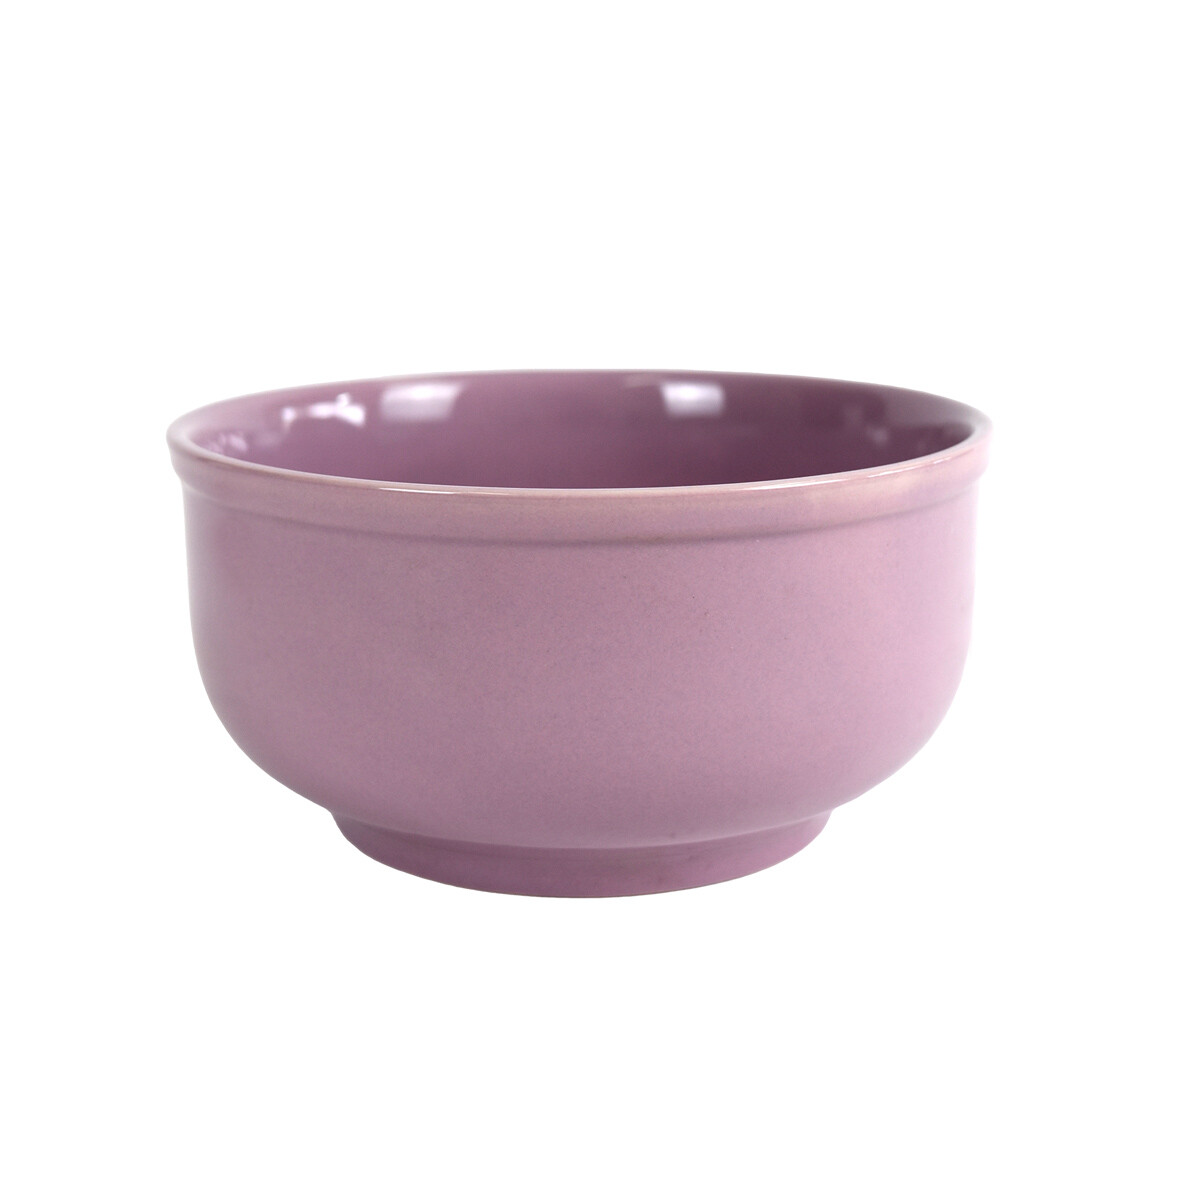 Bowl de cerámica de colores 